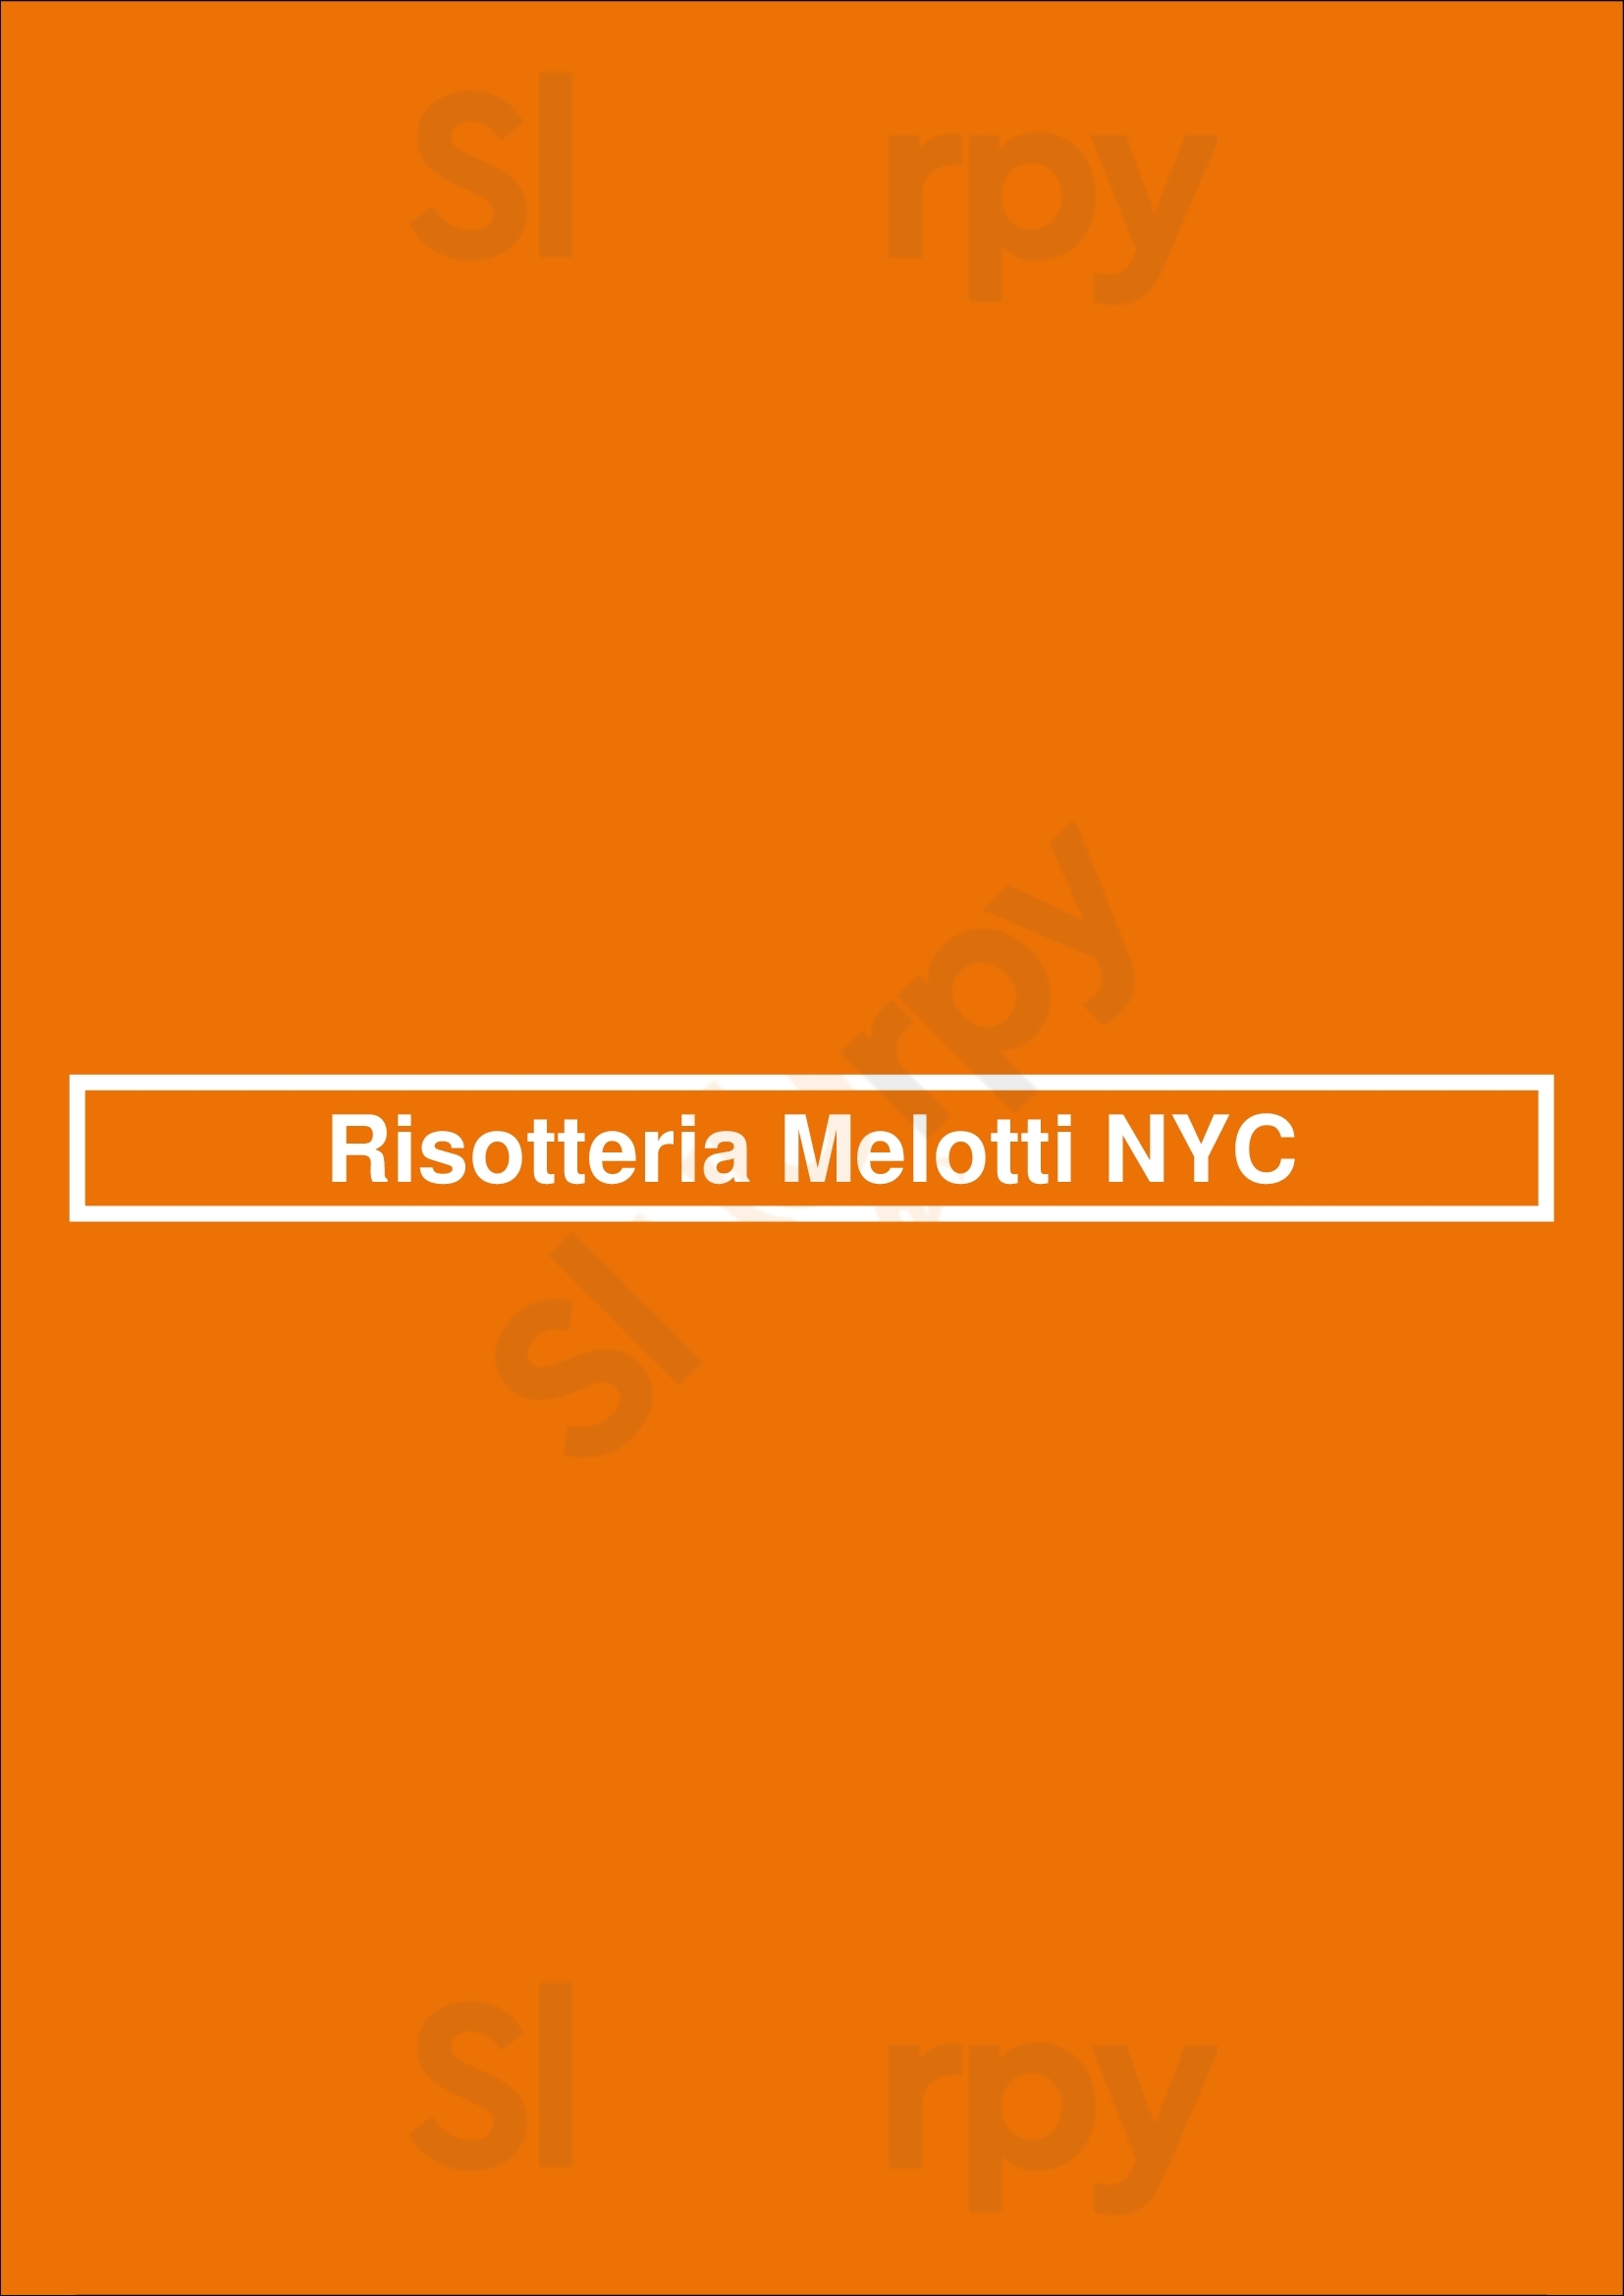 Risotteria Melotti Nyc New York City Menu - 1